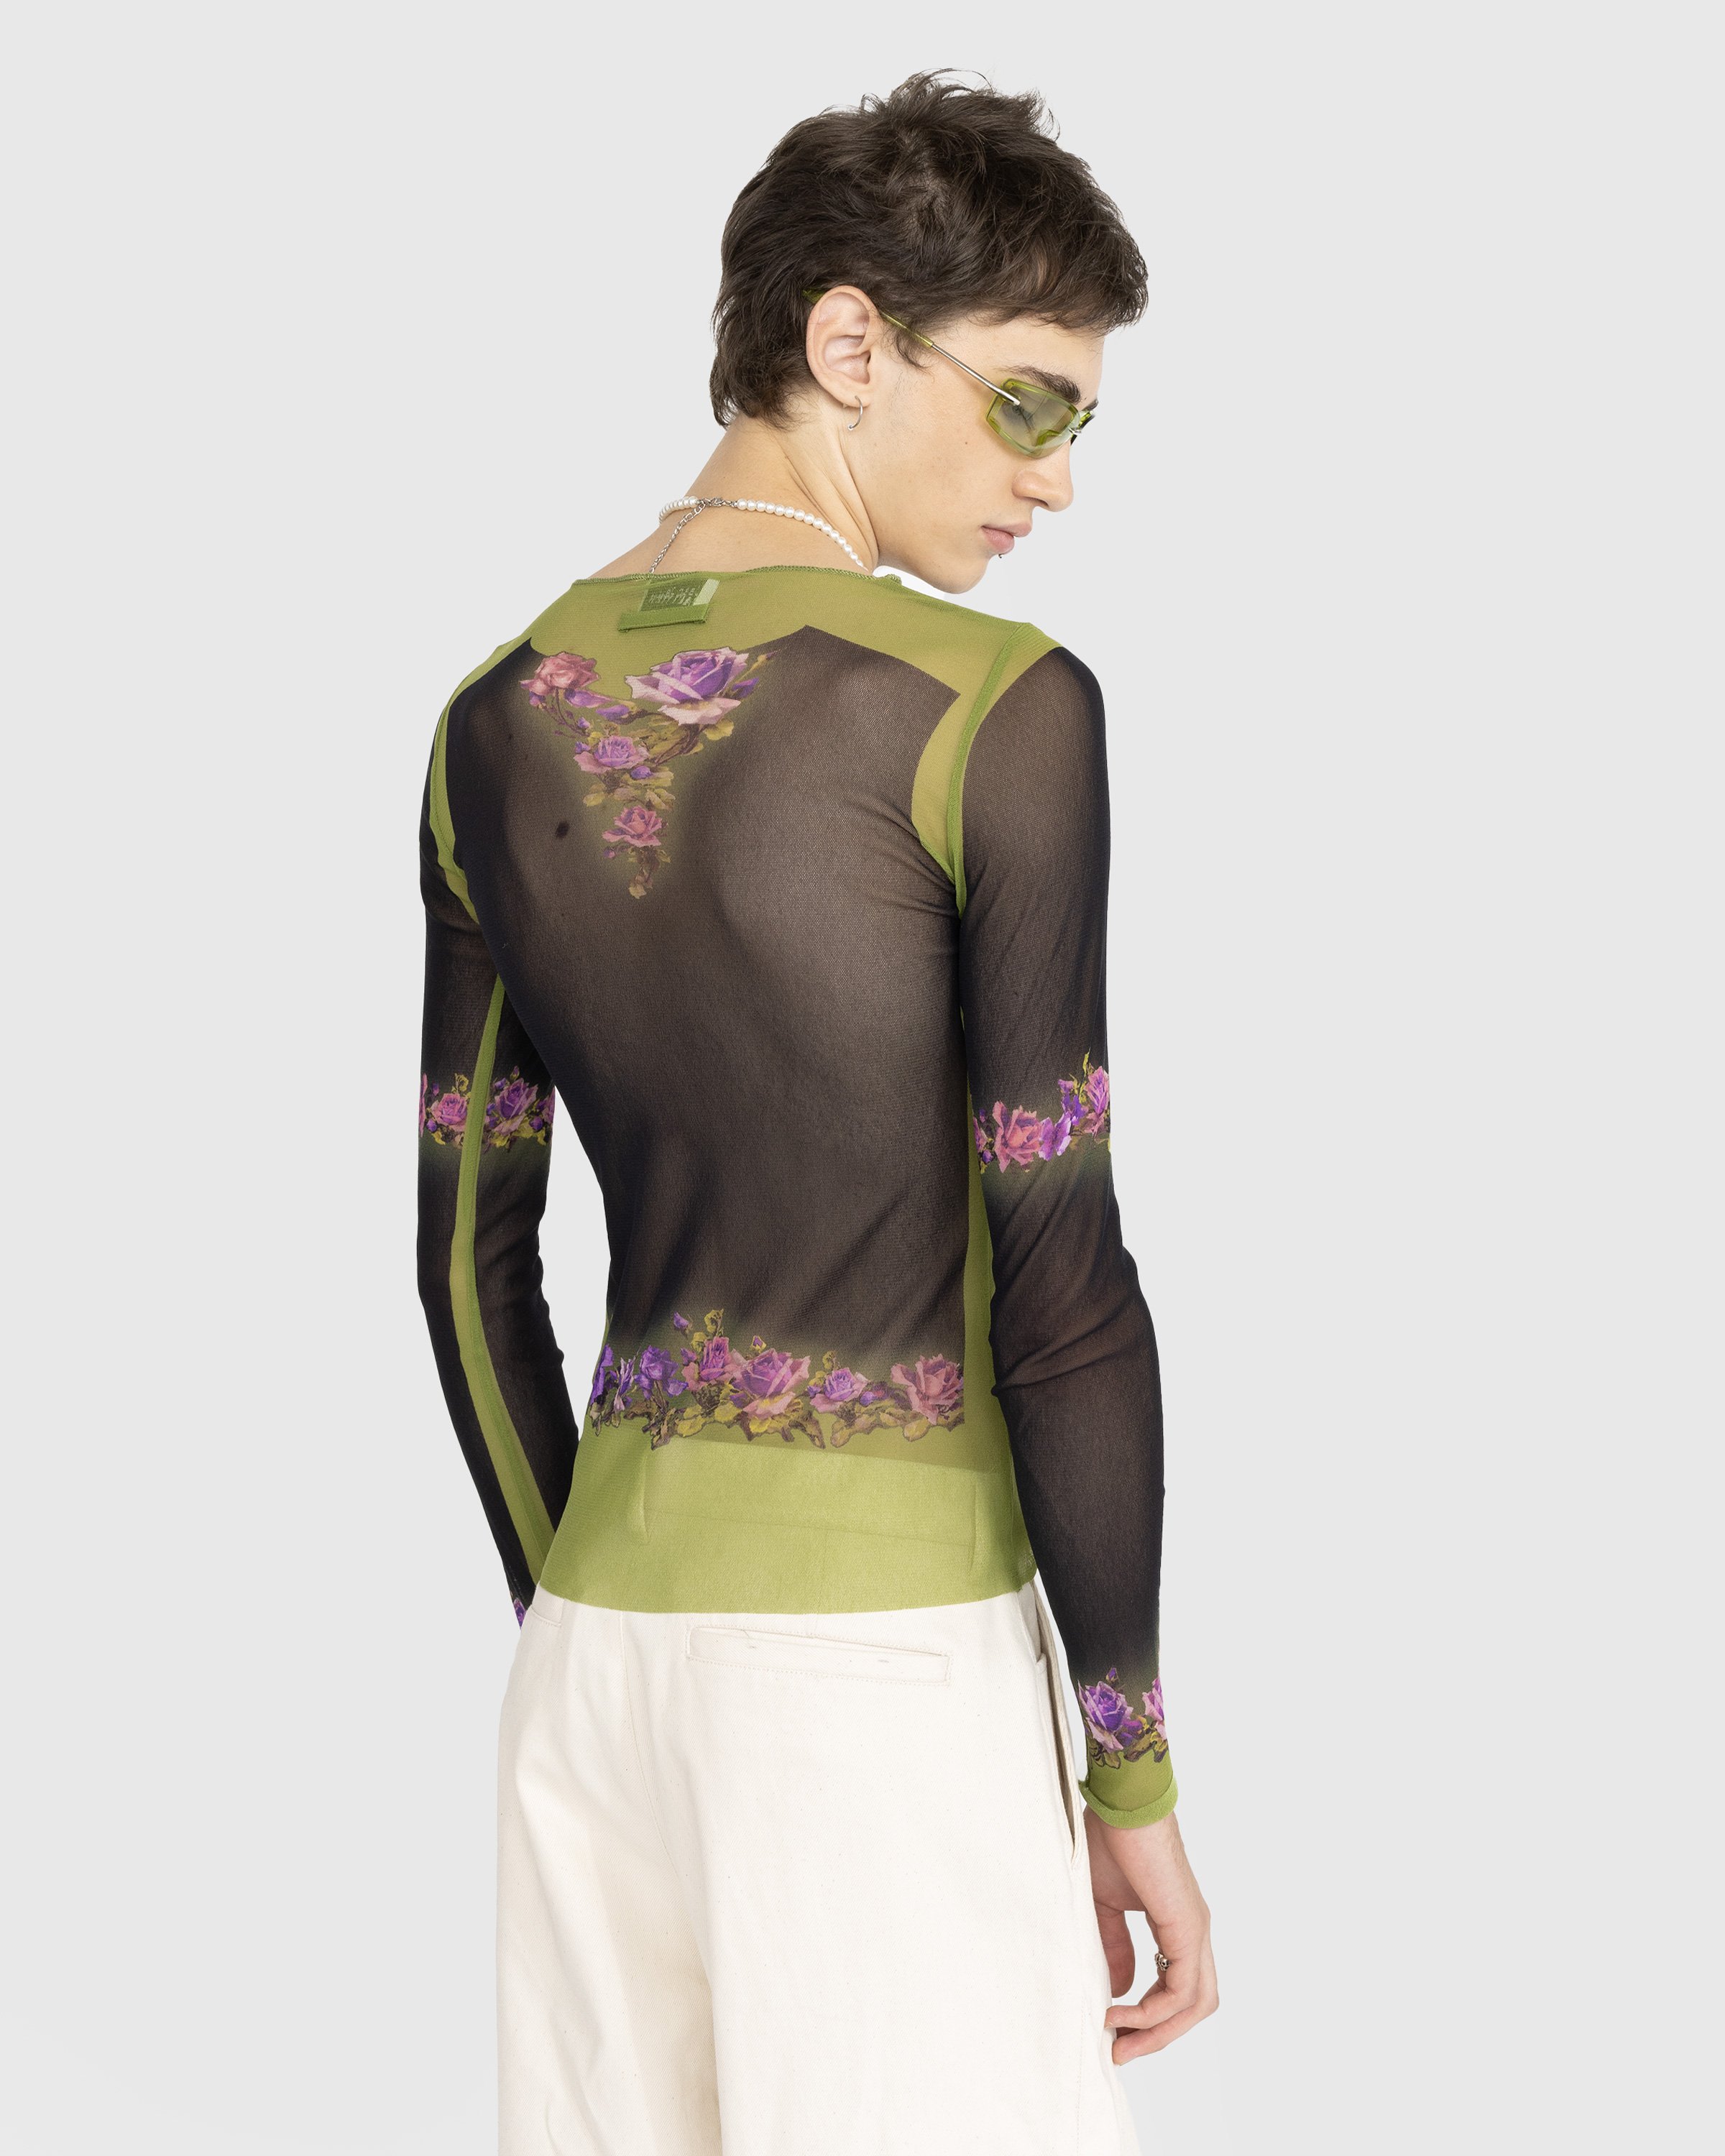 Jean Paul Gaultier - Crew Neck Long Sleeves "Fleurs Petit Grand" Green - Clothing - Green - Image 3